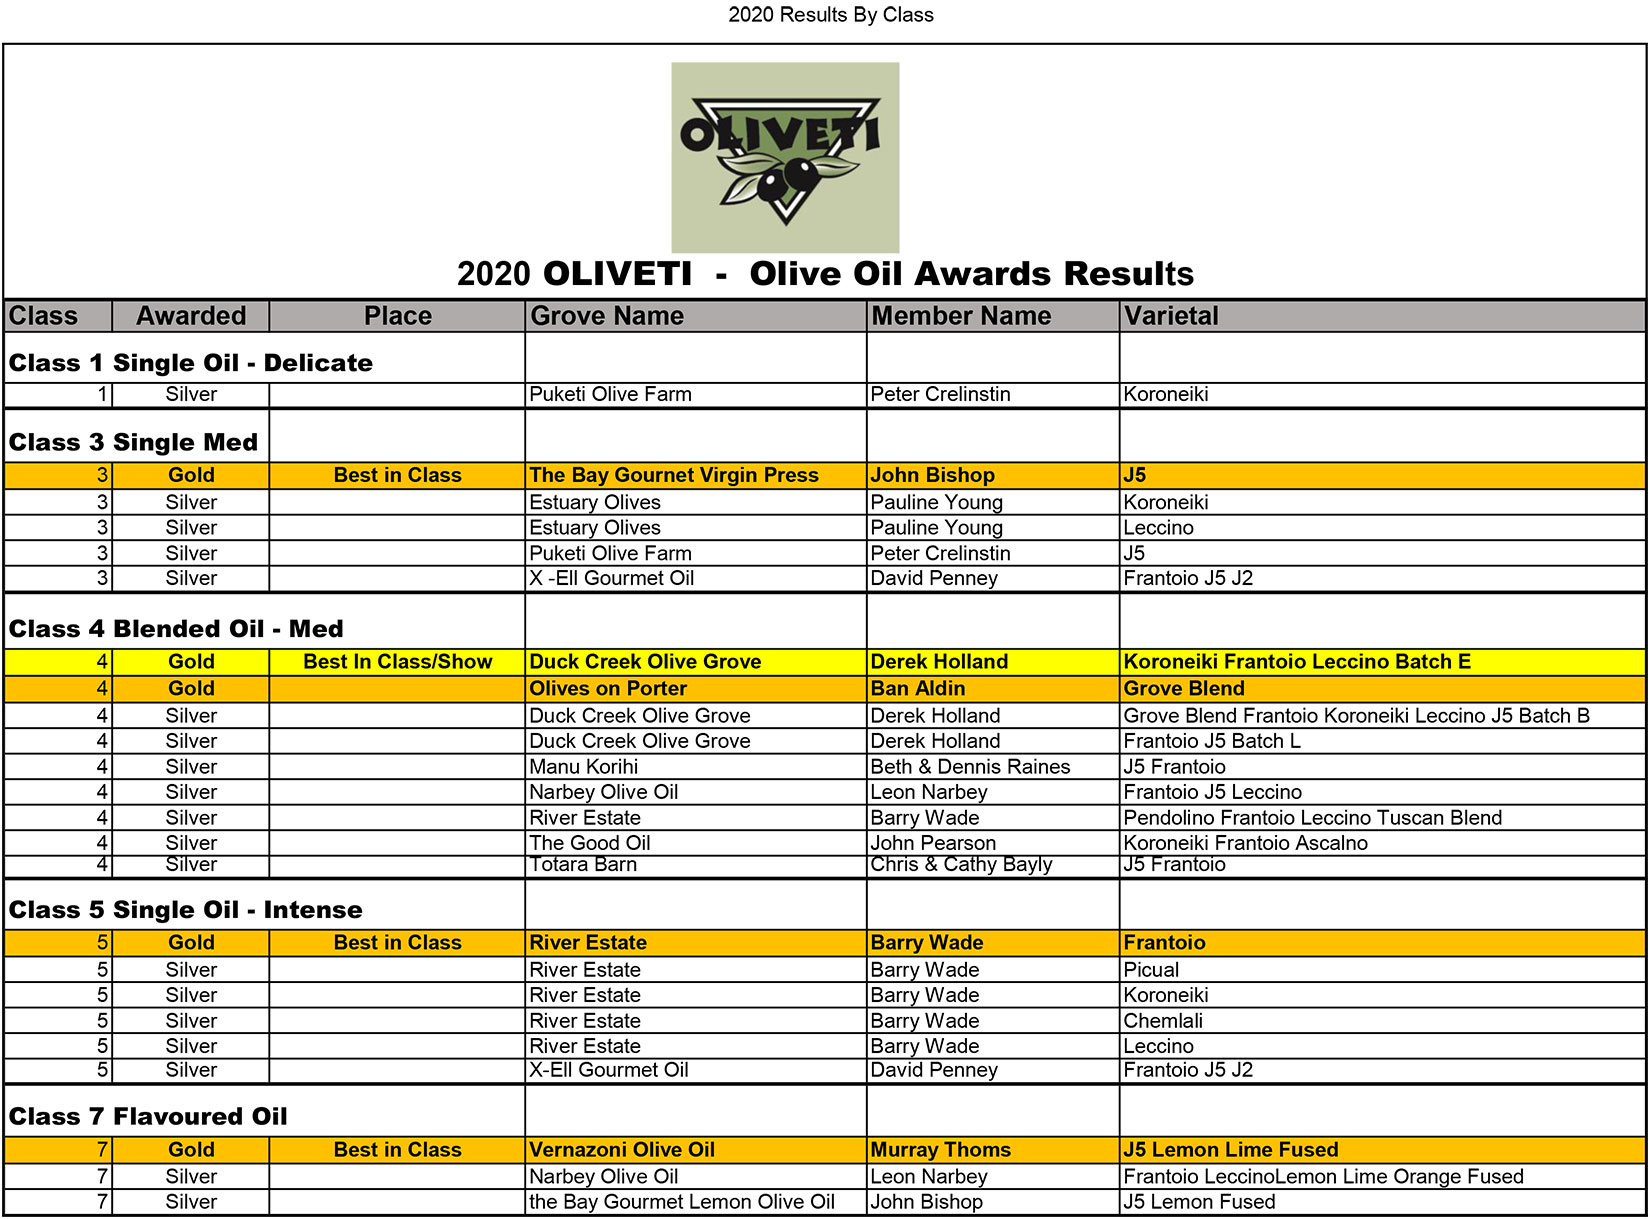 2020 Olive Oil Award Results